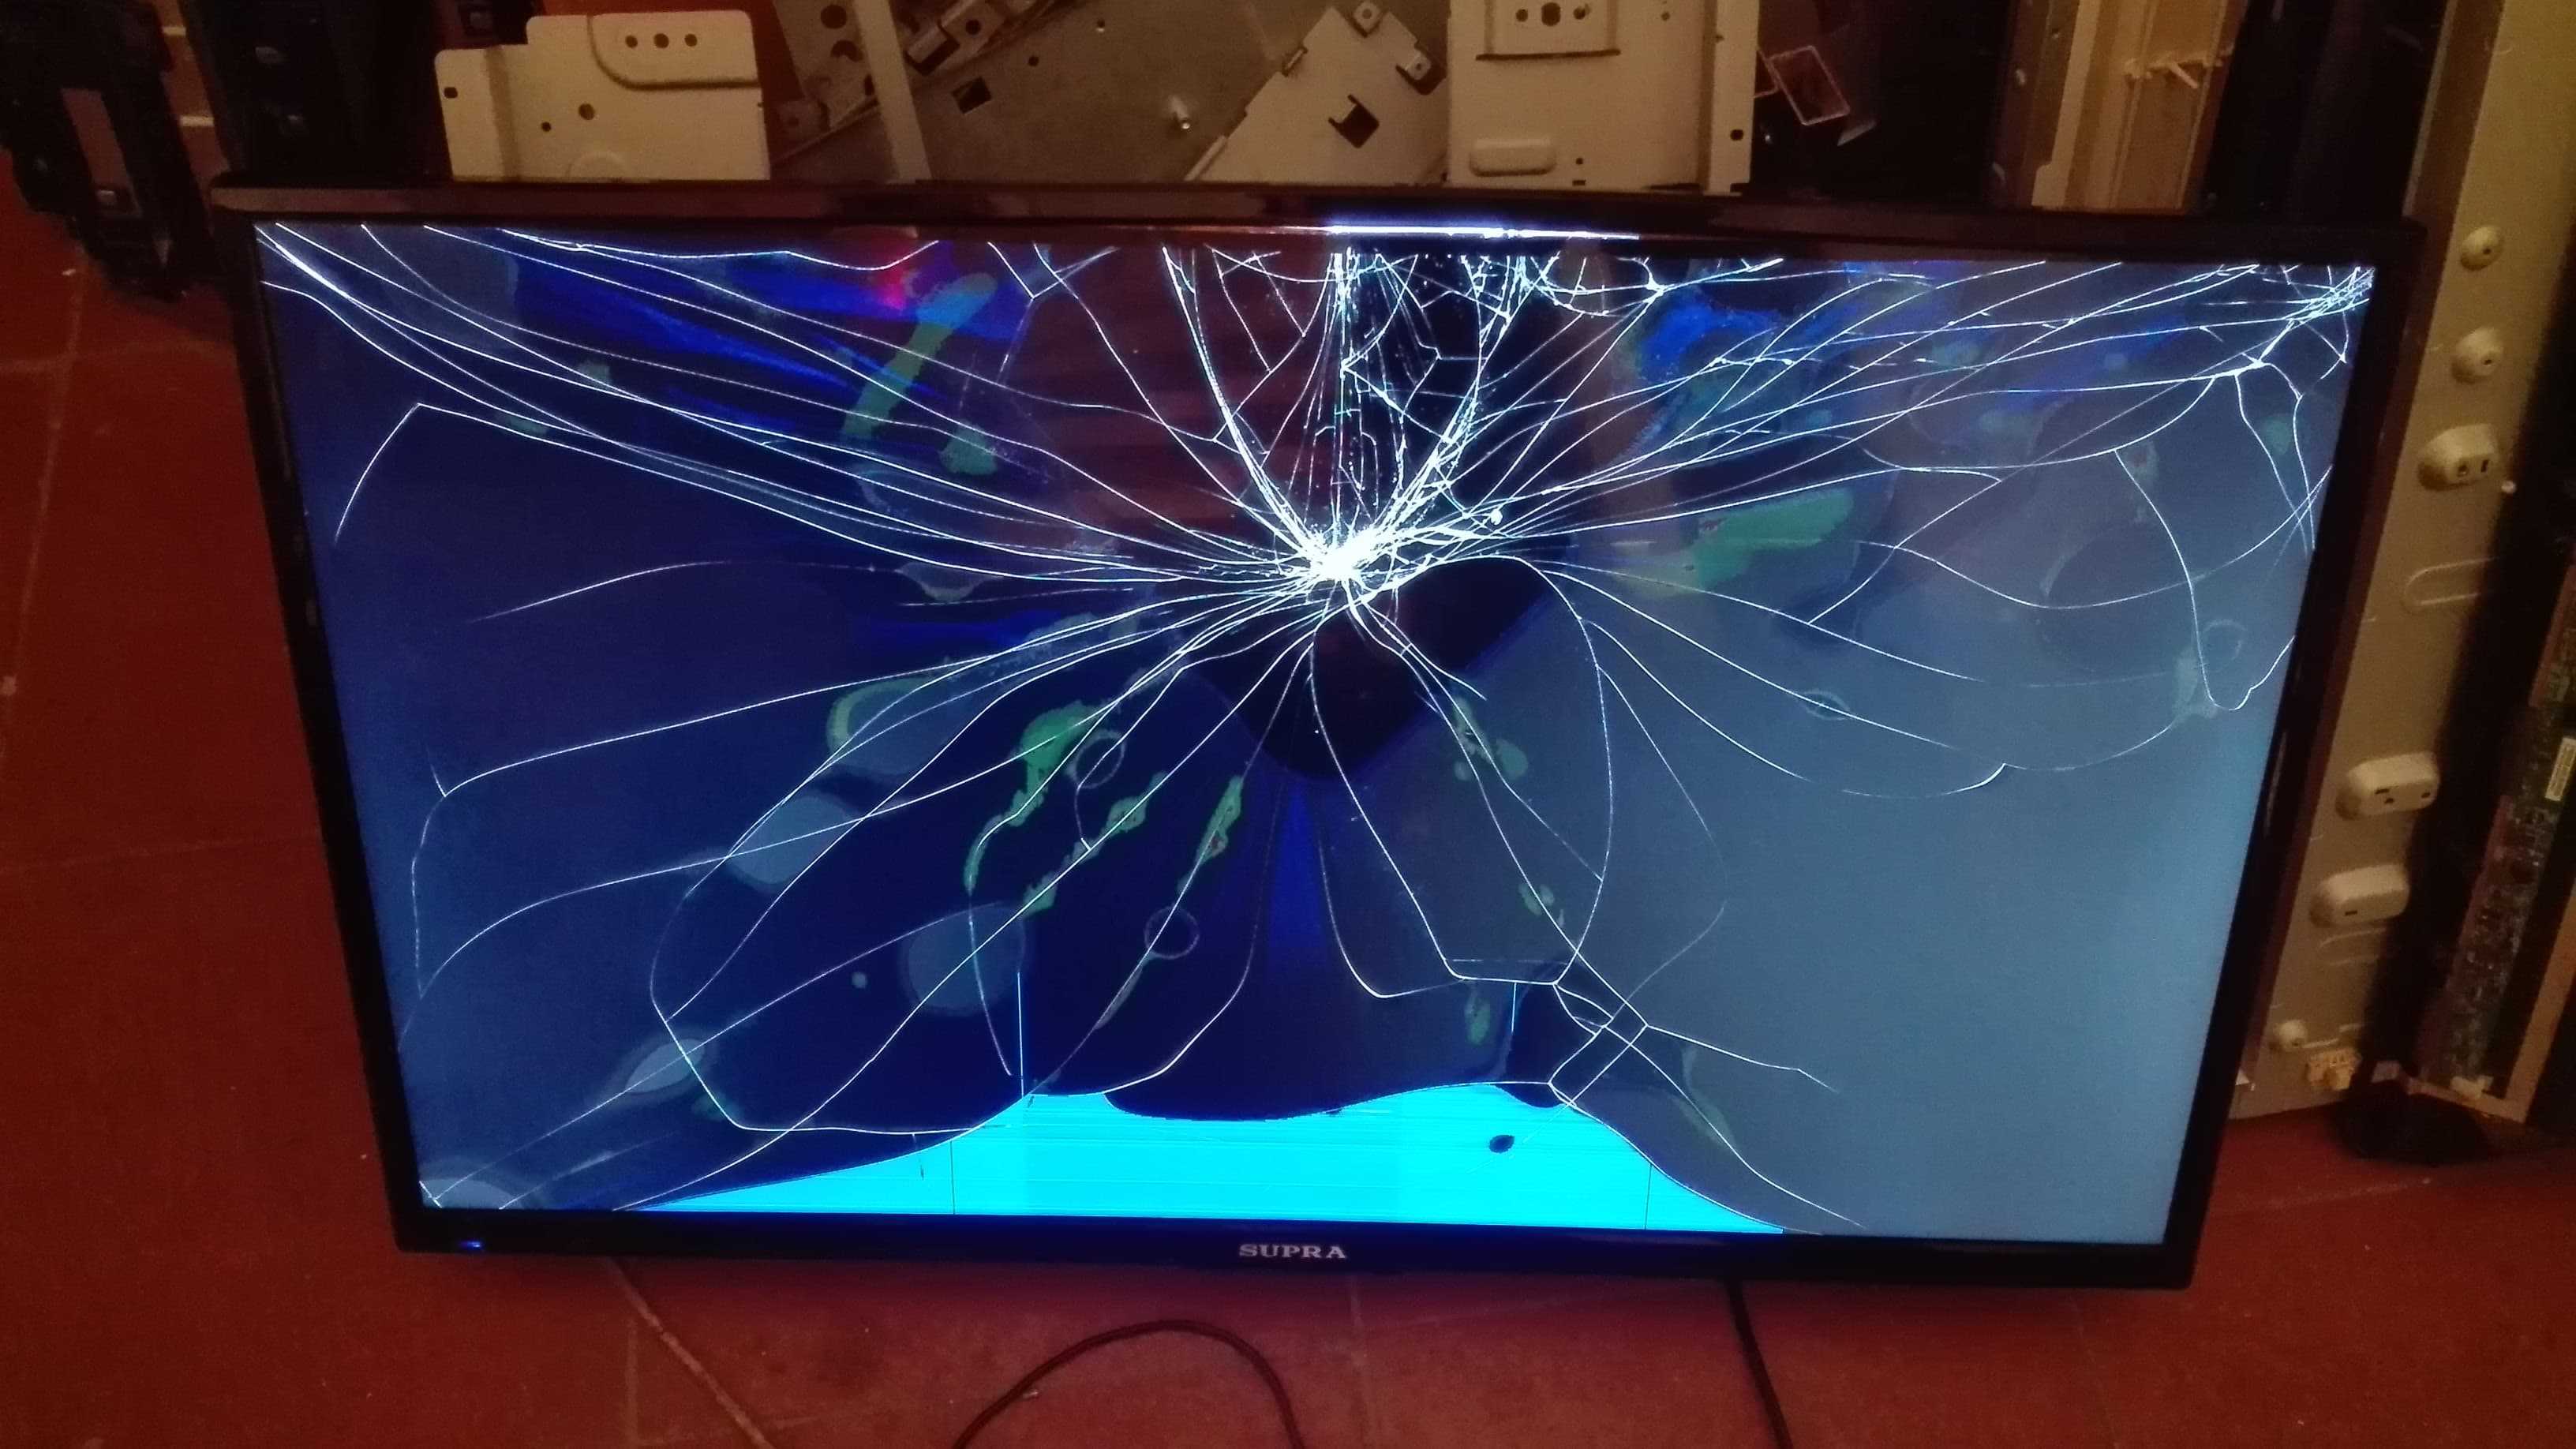 Разбит экран жк телевизора - возможен ли ремонт